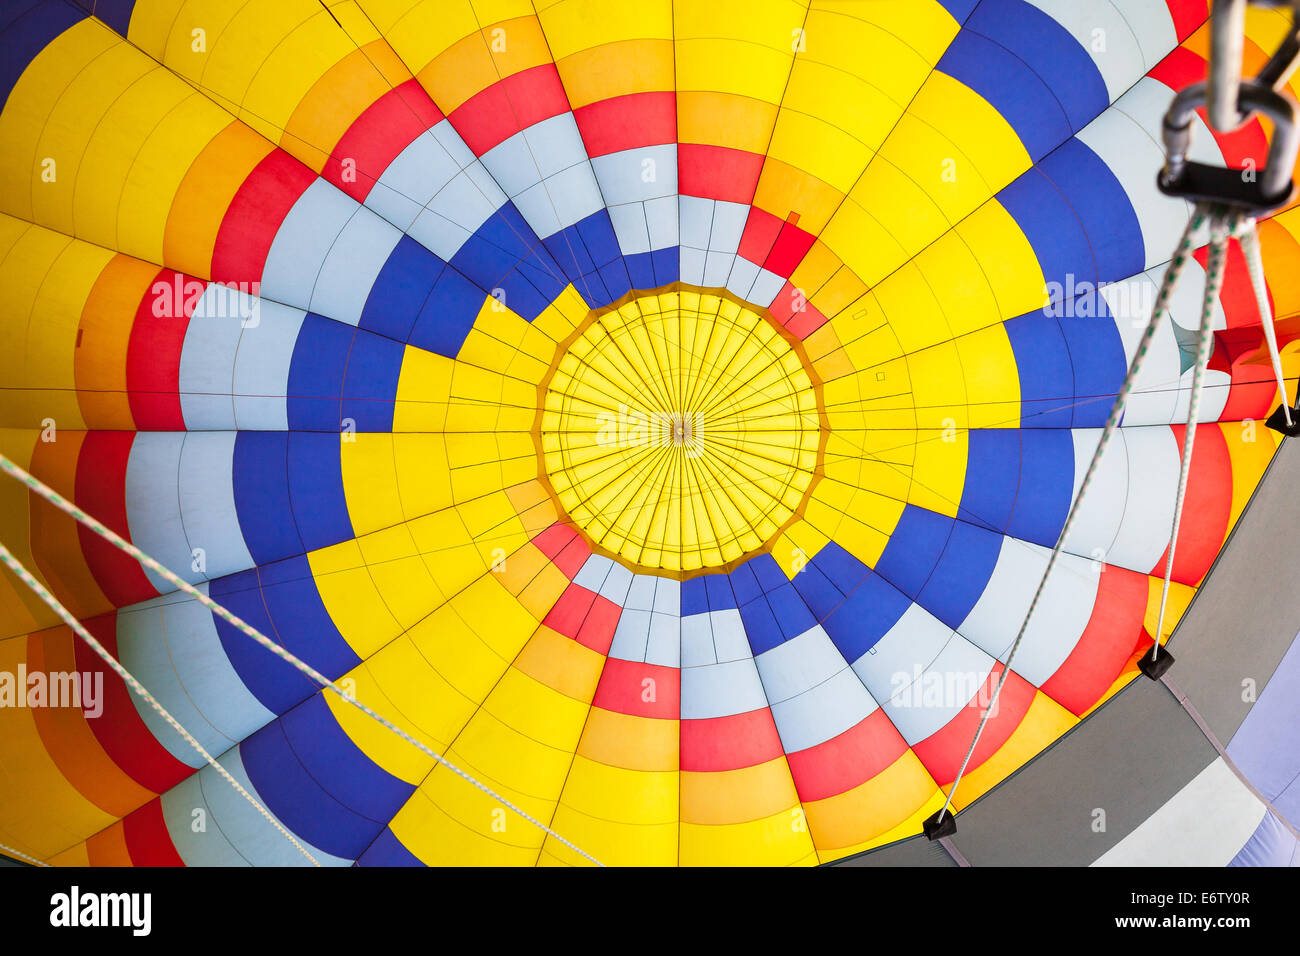 Hot Air Balloon Interior Geometric Shapes Stock Photo